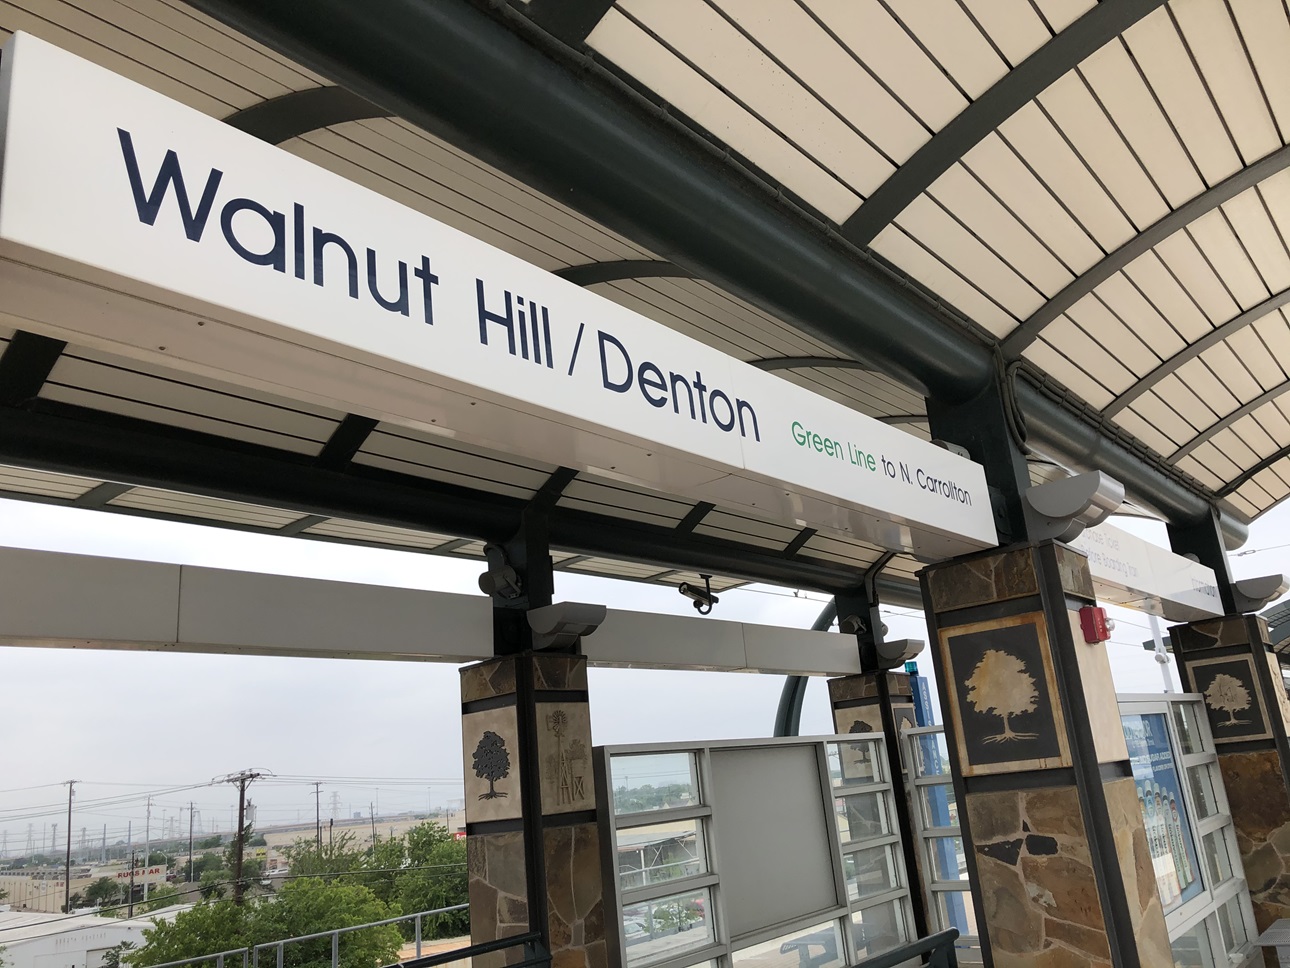 Walnut Hill/Denton Train Station, Dallas TX